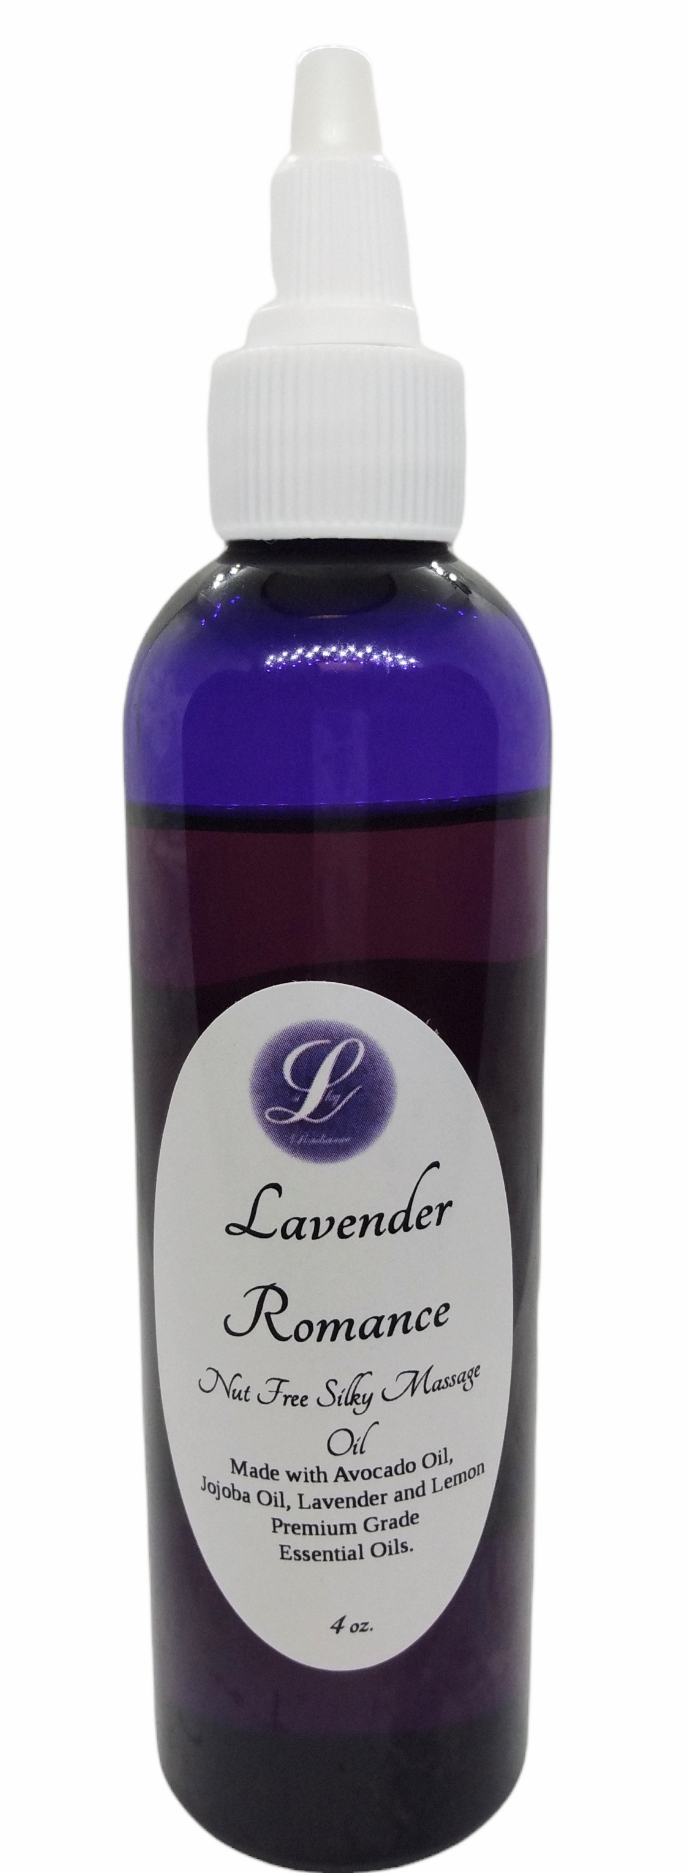 Lavender Romance Nut Free Silky Massage Oil